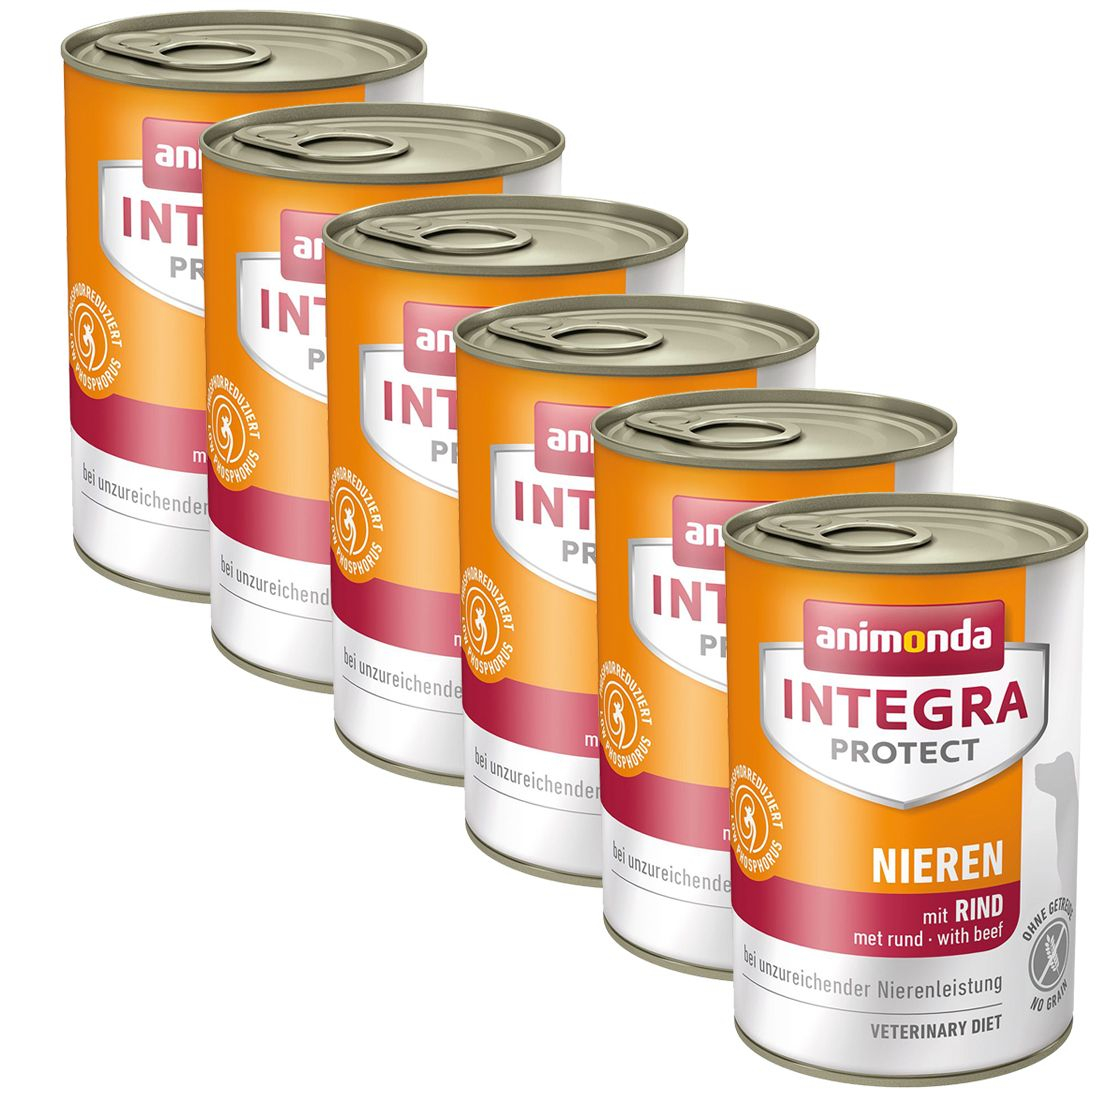 Animonda INTEGRA Protect Nieren Vese 6 x 400 g